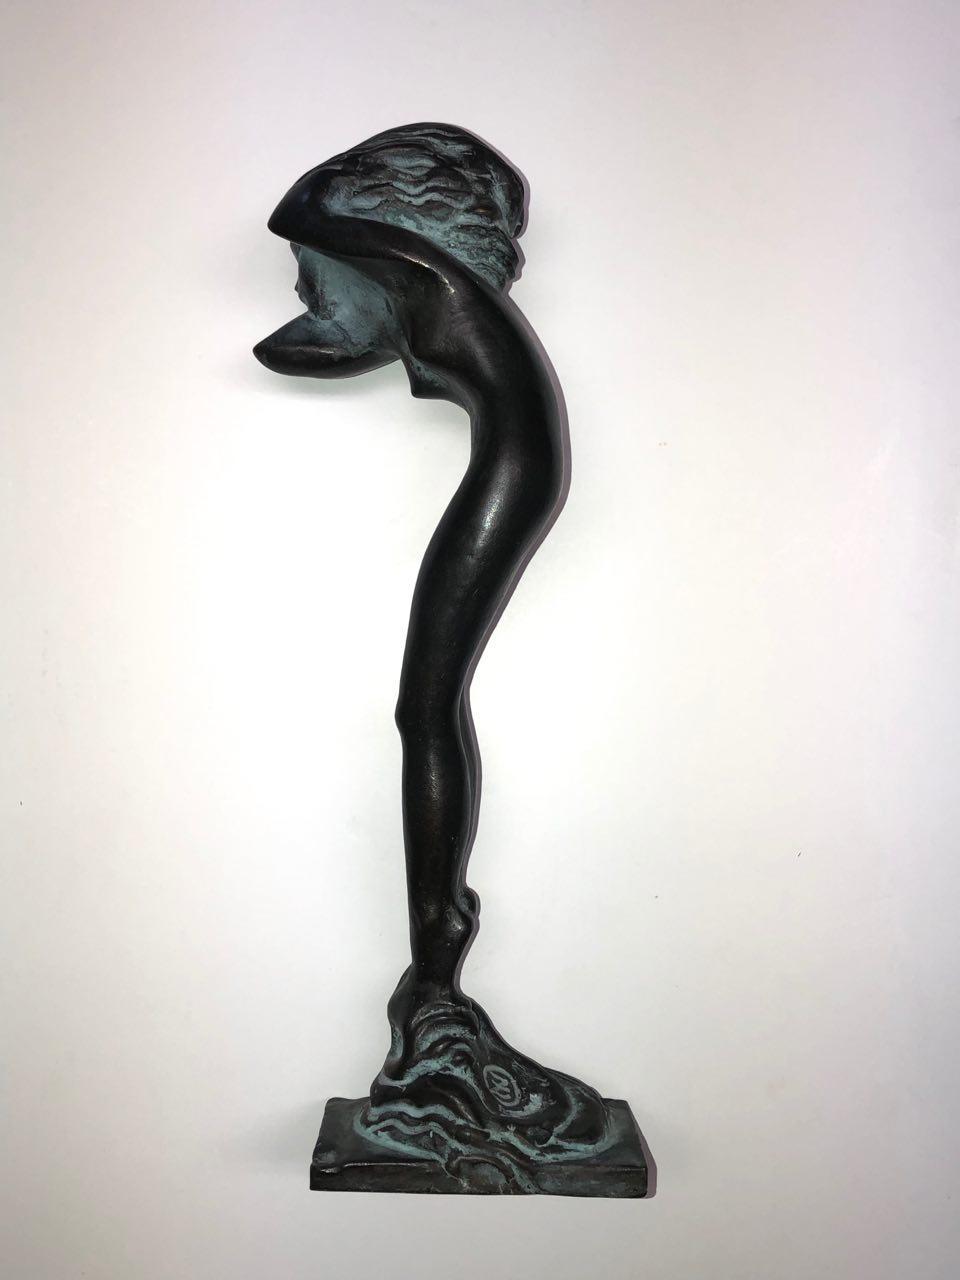 Wave, Oleg Zakomorny, 15", Bronze, $1250